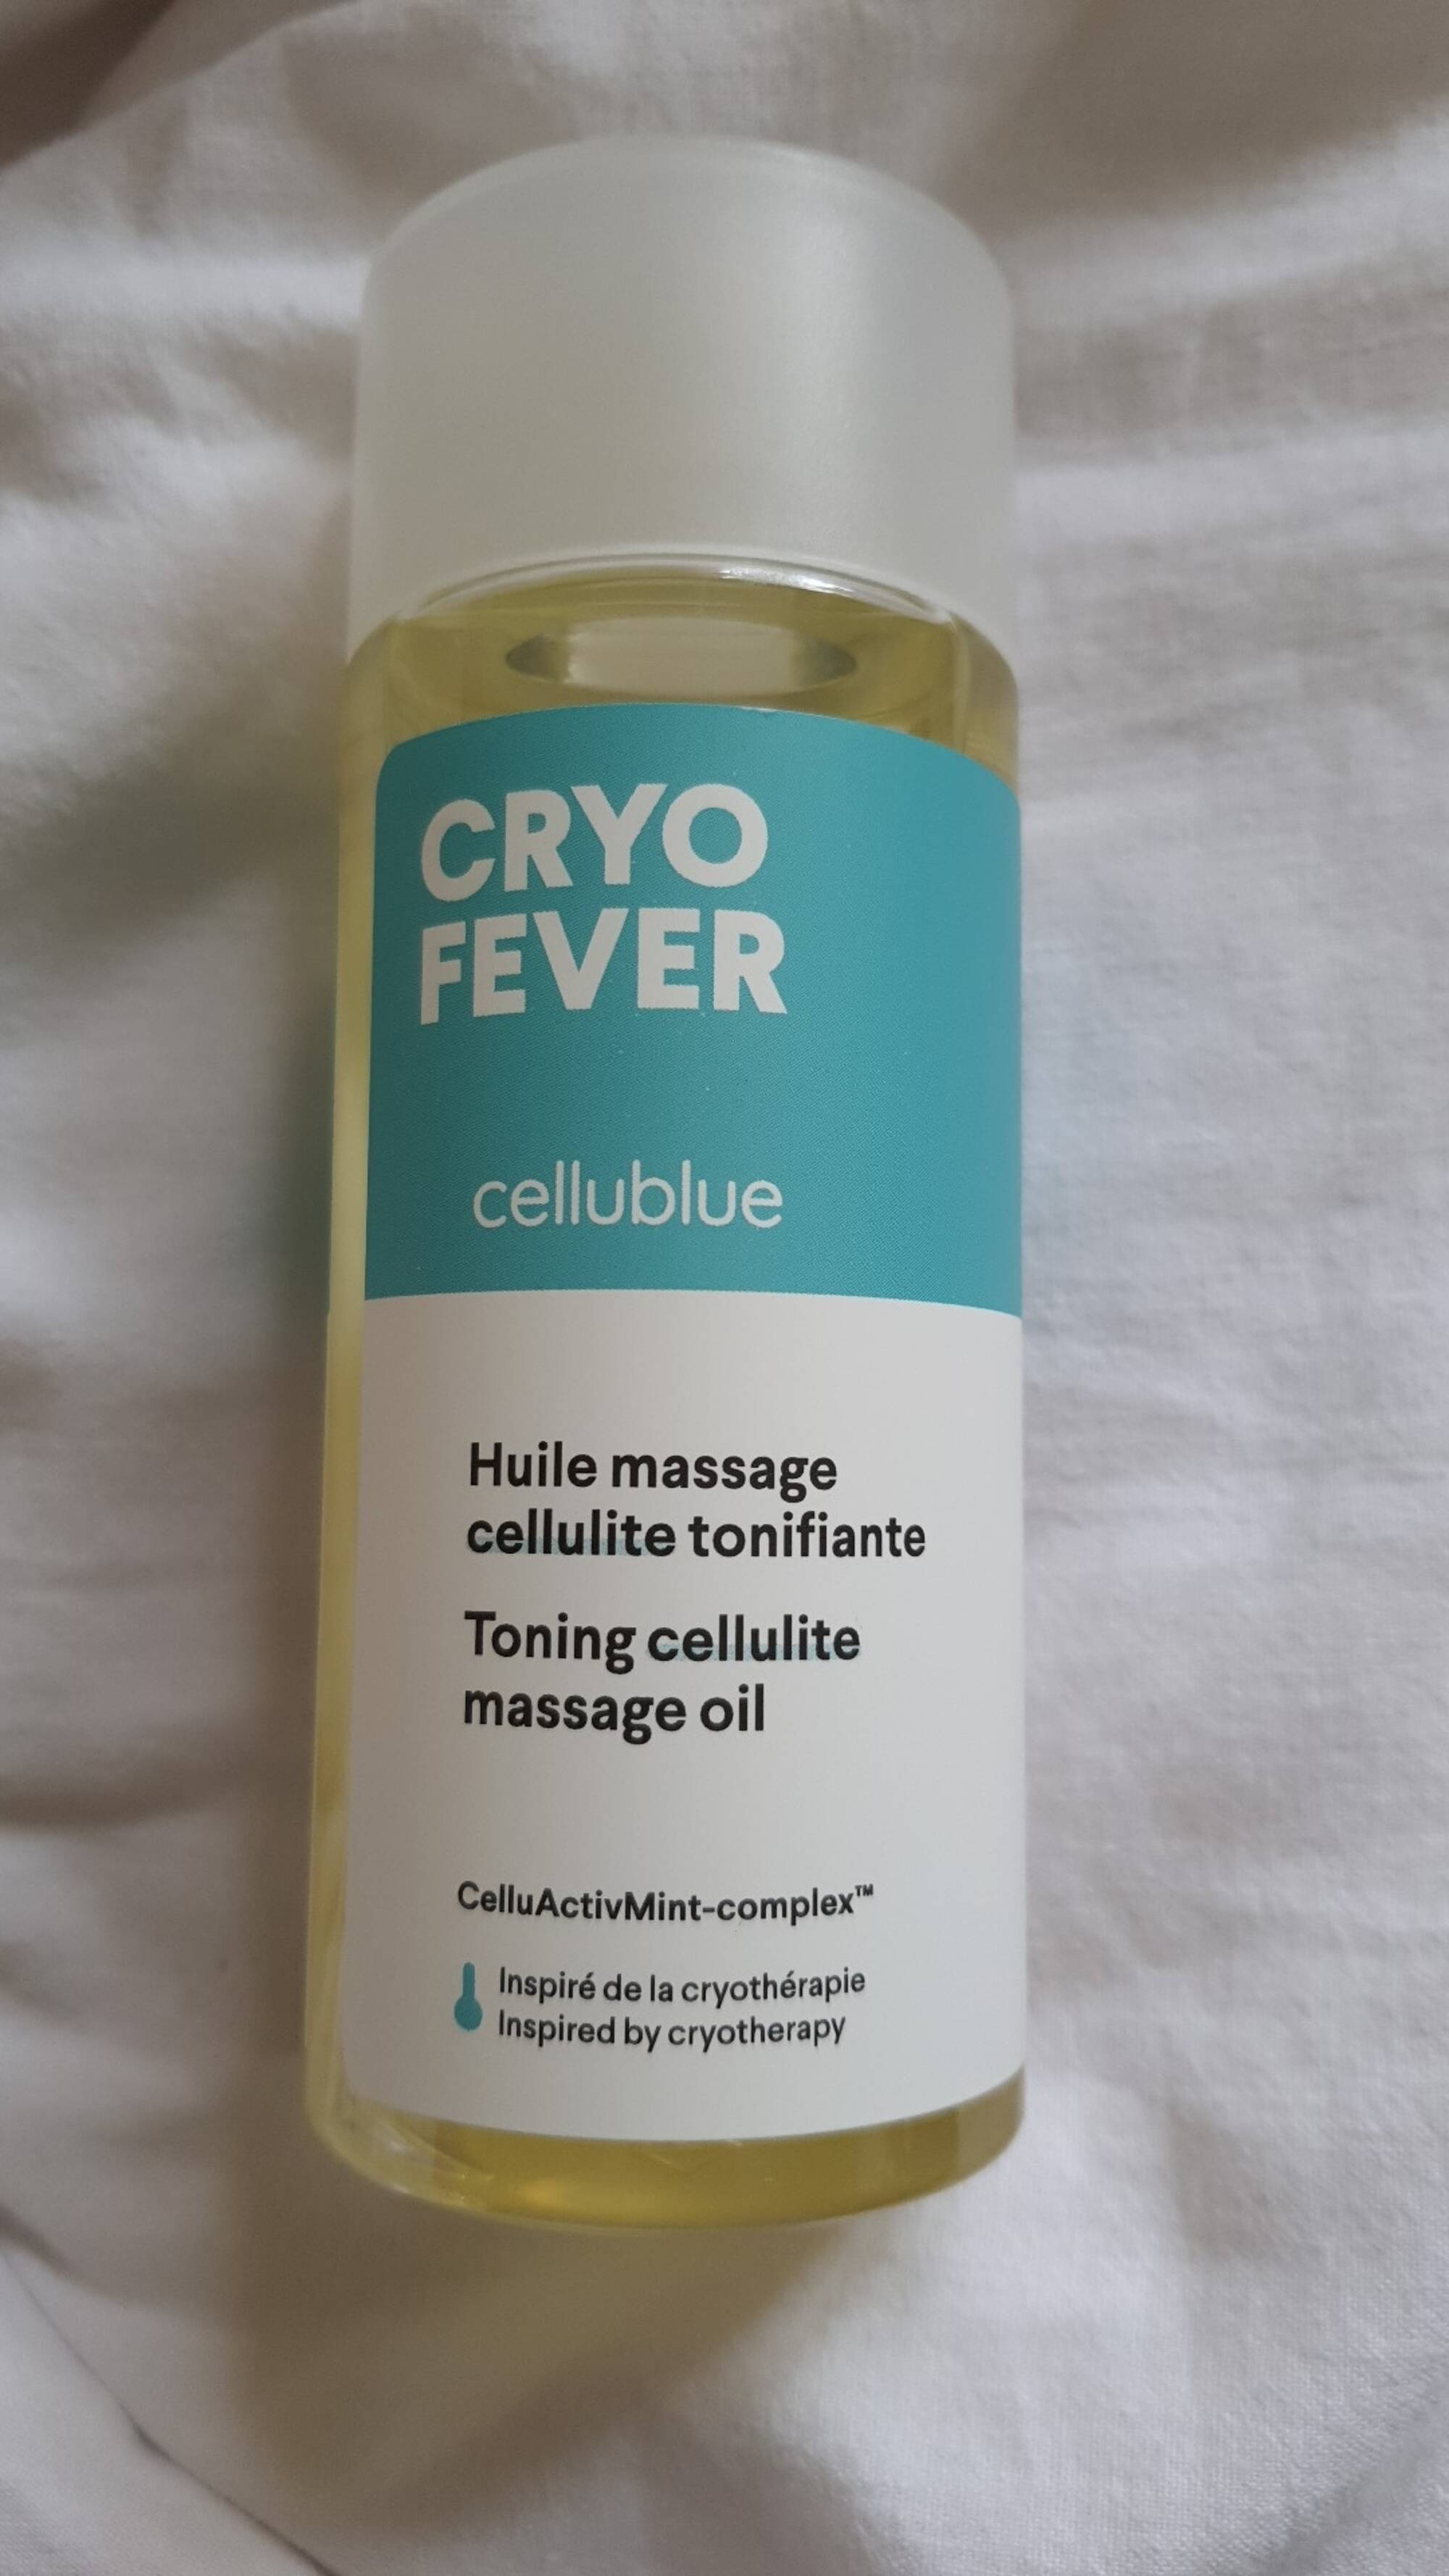 CELLUBLUE - Cryo fever - Huile massage cellulite tonifiante